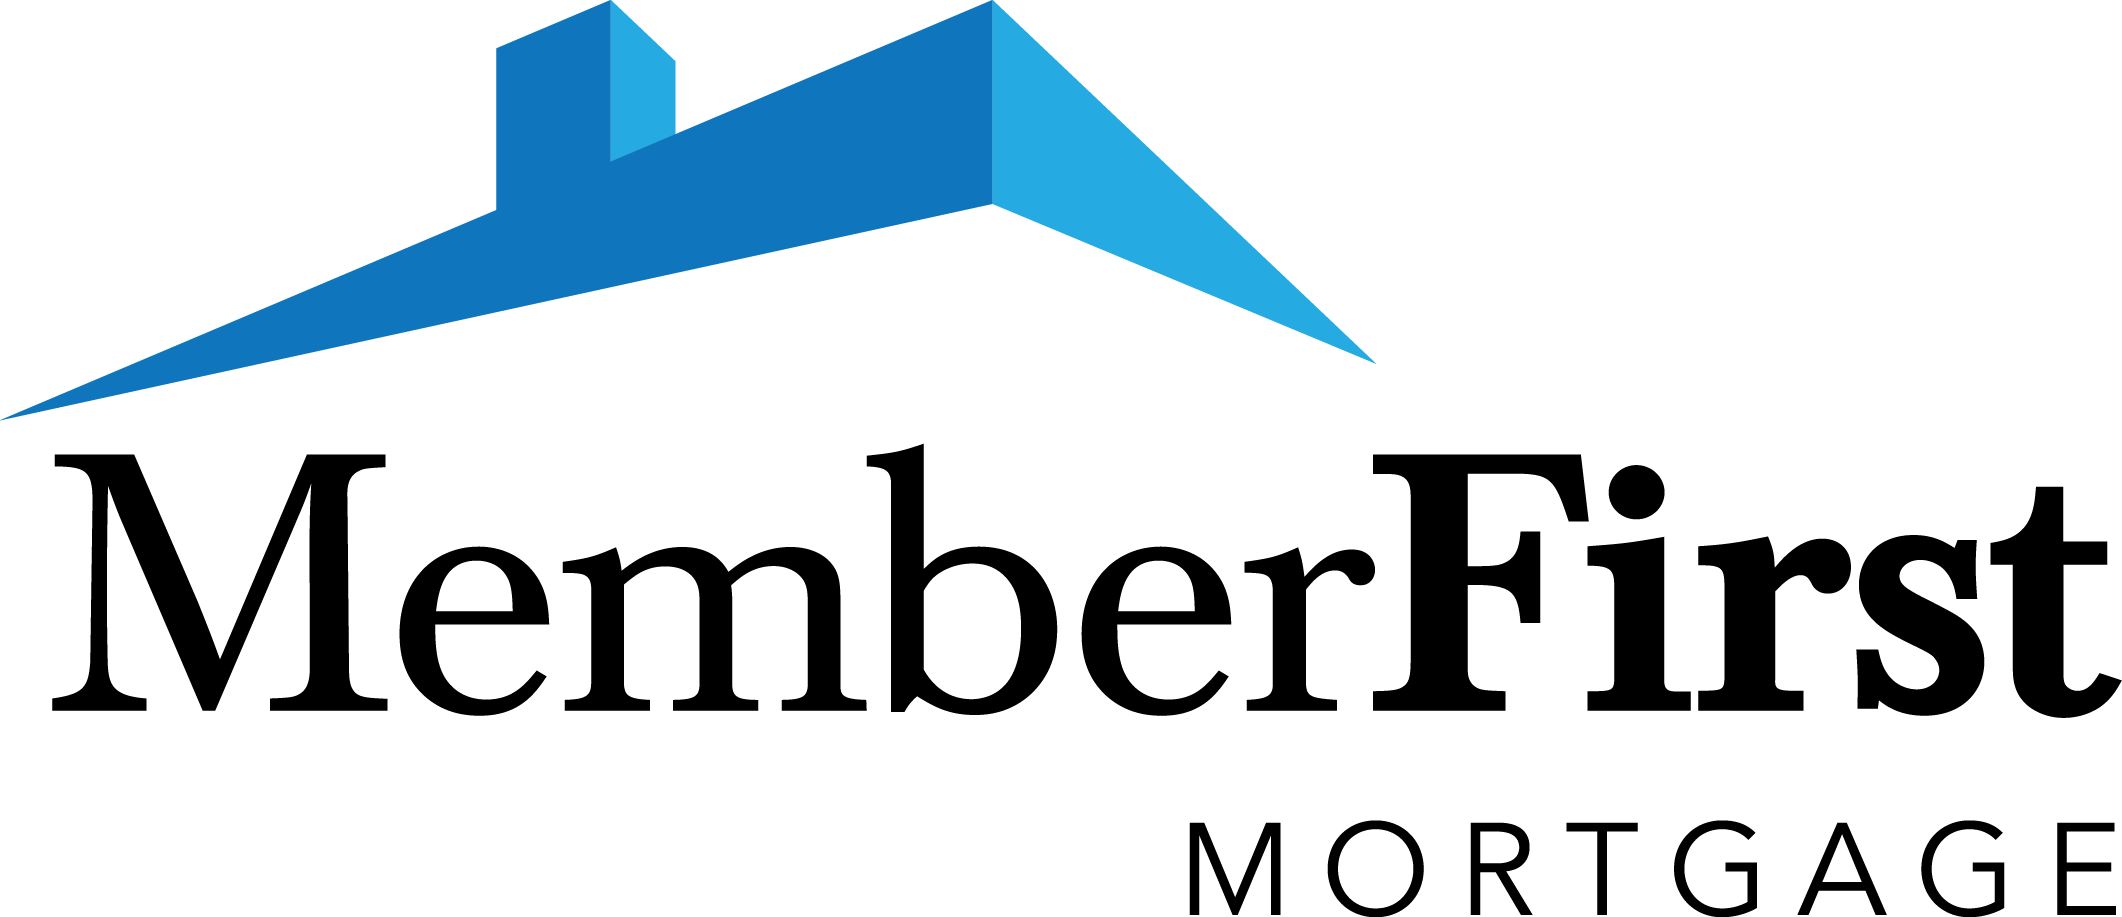 Member First Mortgage transparent logo